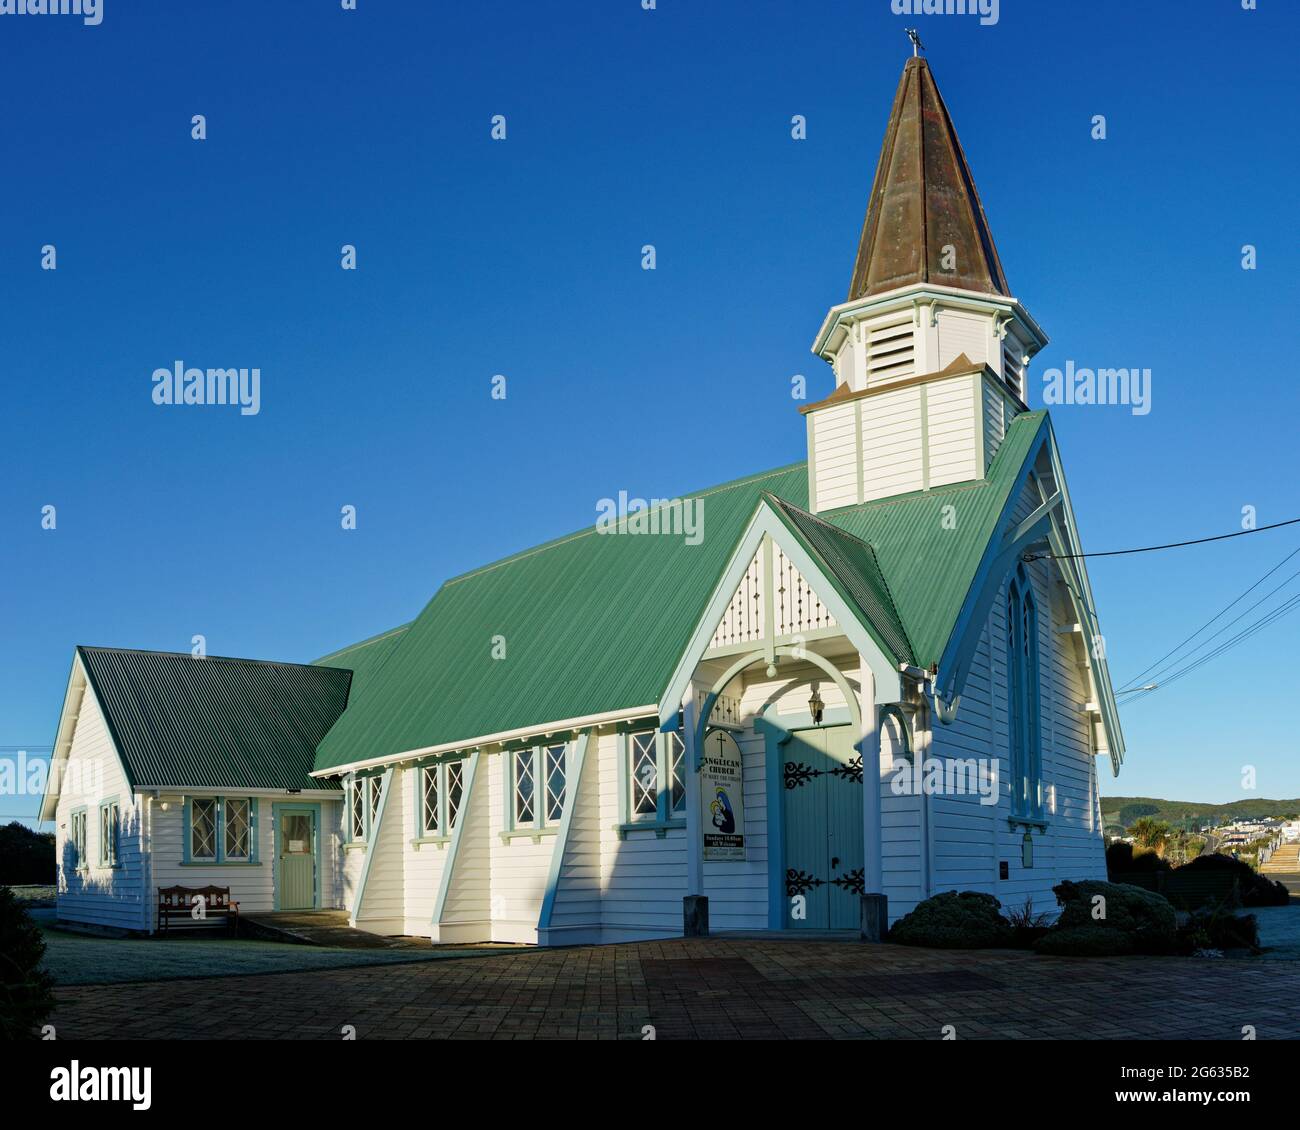 Riverton - Southland/New Zealand - June 18, 2021: St. Mary The Virgin Anglican Church, Palmerston Street, Riverton / Aparima. Stock Photo